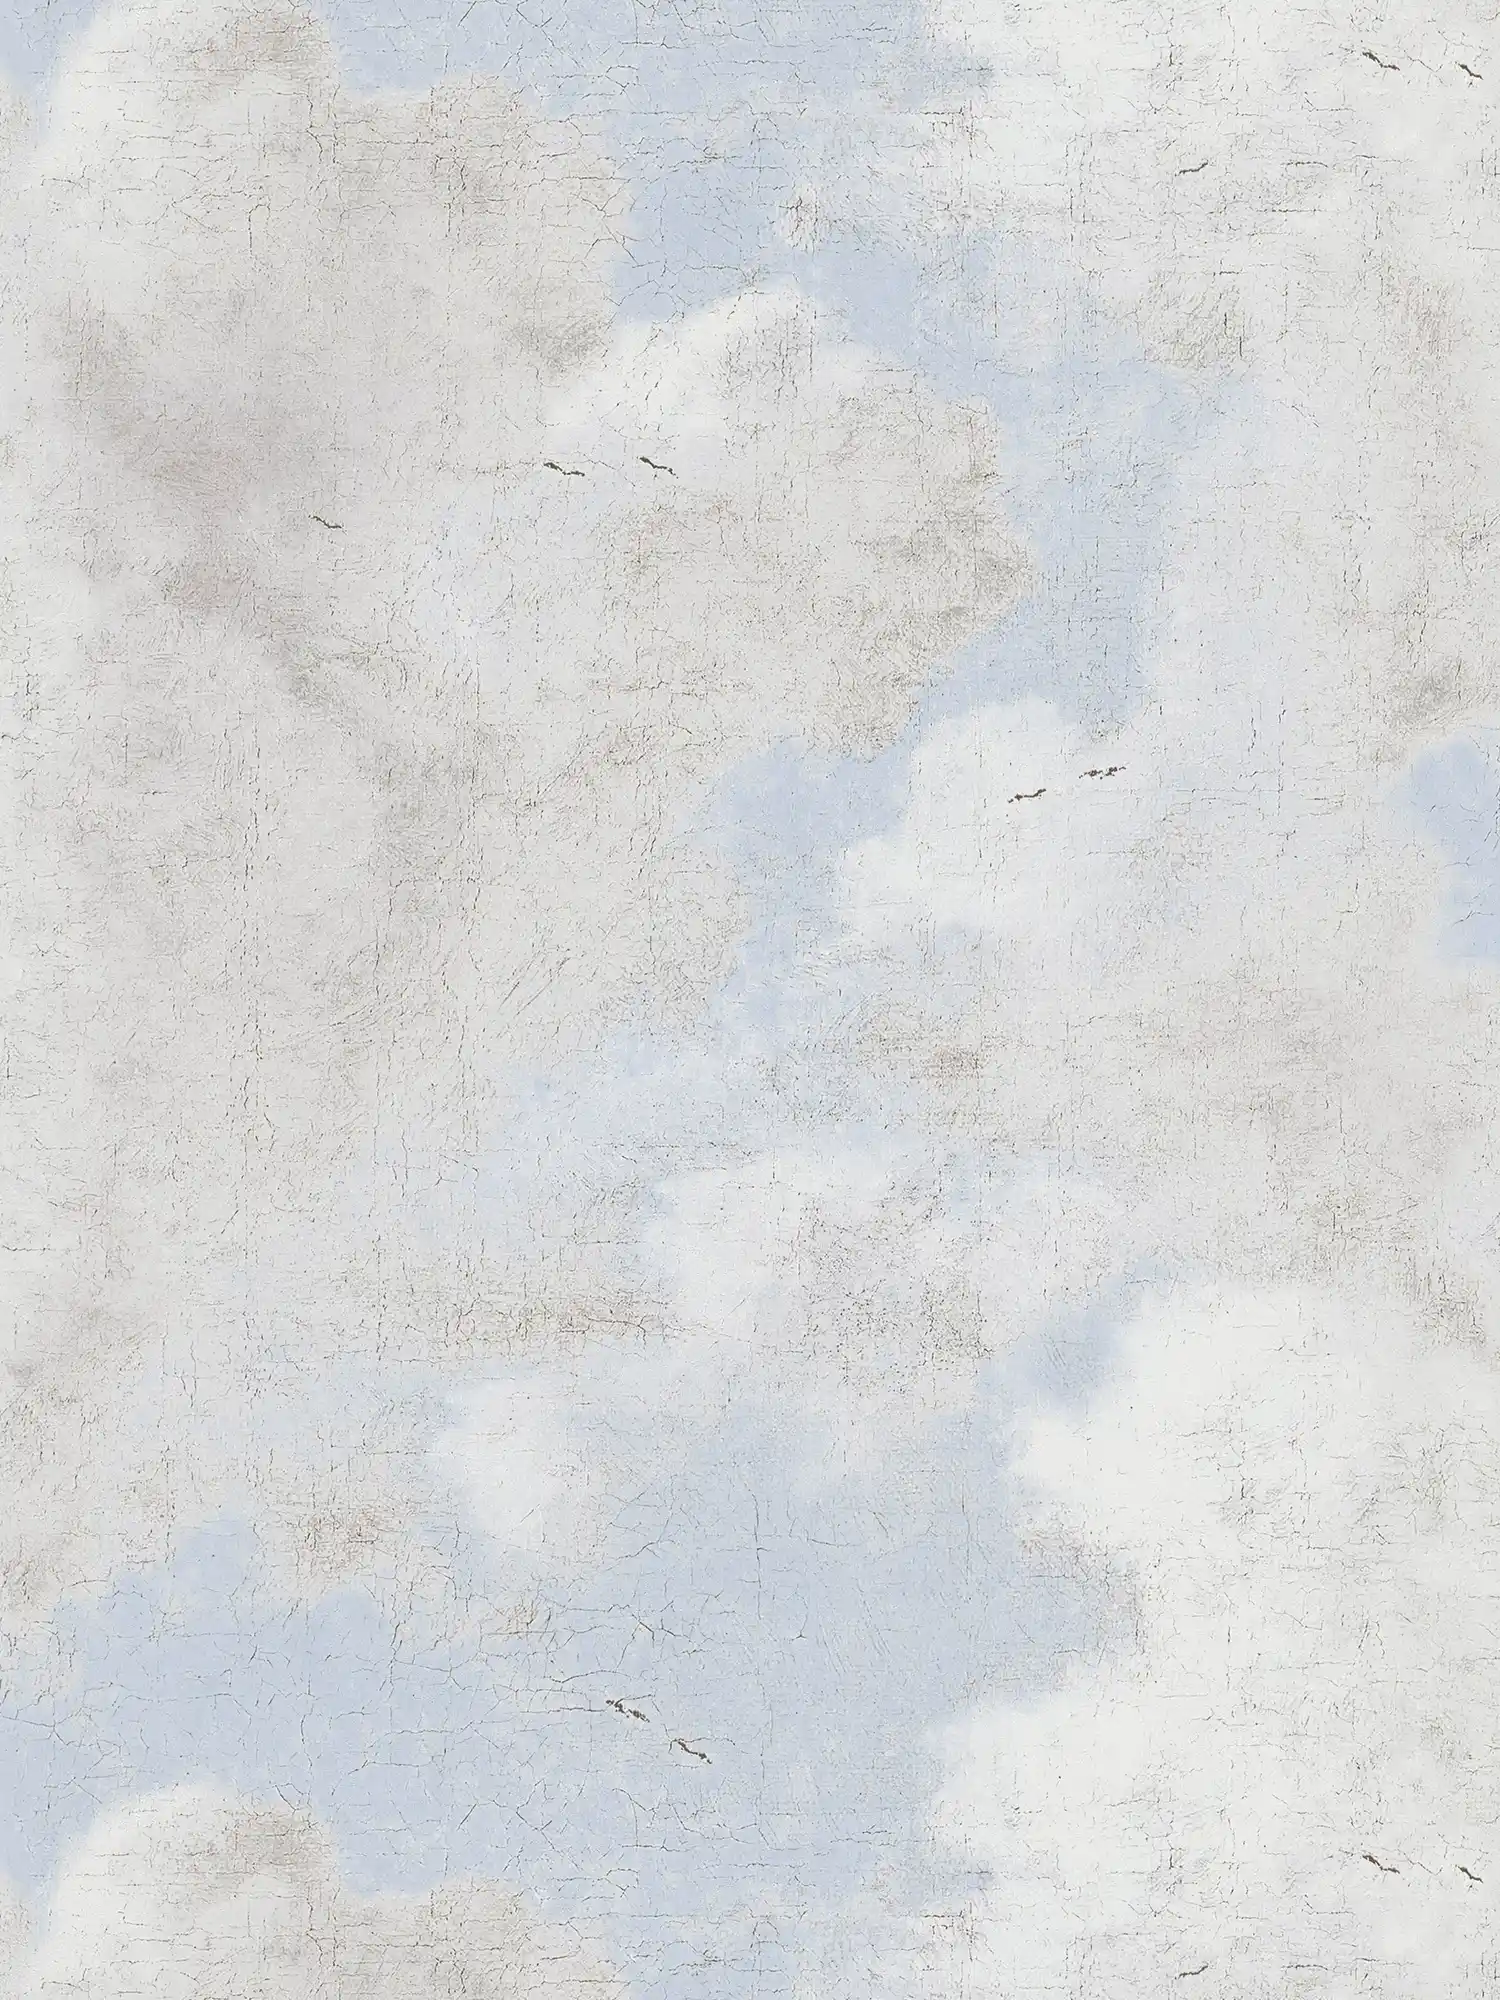 Classic art style sky wallpaper - grey, blue
